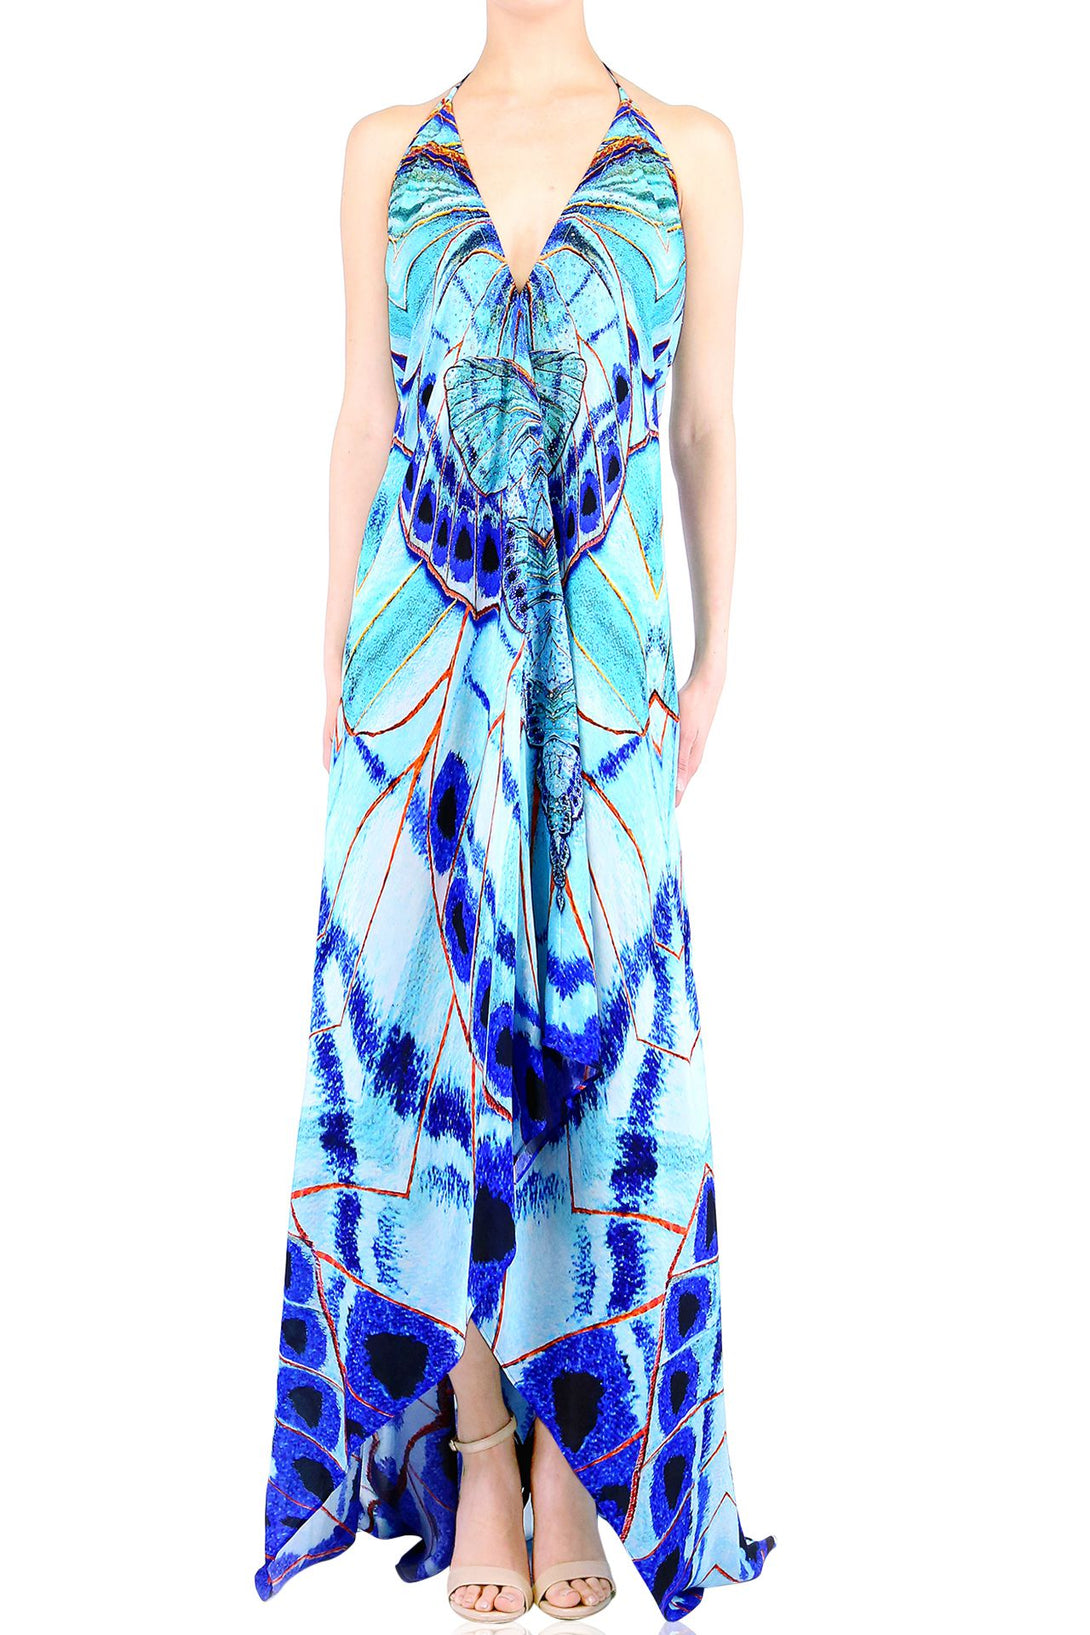  long sleeve blue dress maxi, long summer dresses for women, plunge neck cocktail dress, Shahida Parides,